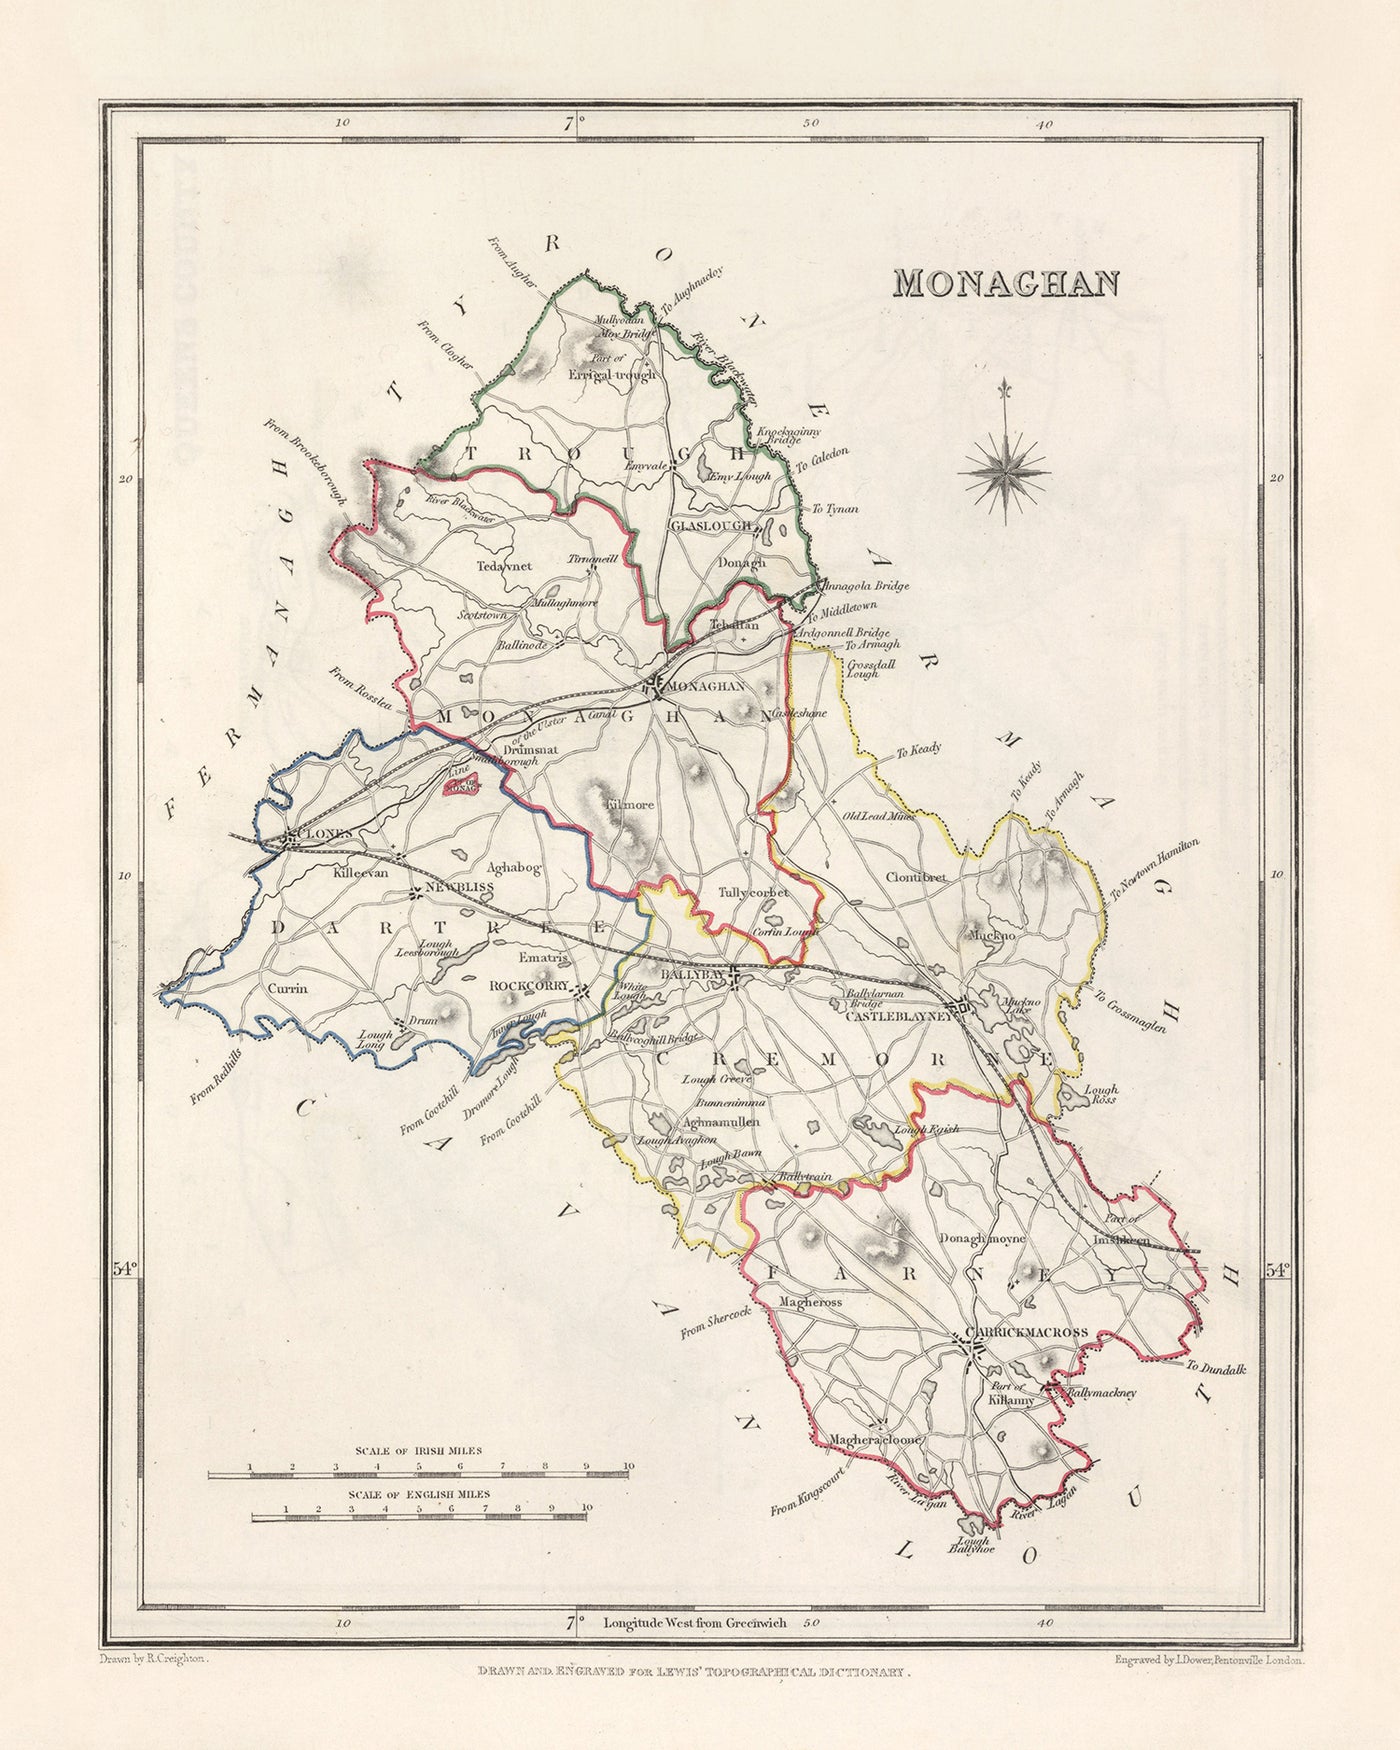 Old Map of County Monaghan by Samuel Lewis, 1844: Castleblayney, Clones, Ballybay, Carrickmacross, Glaslough